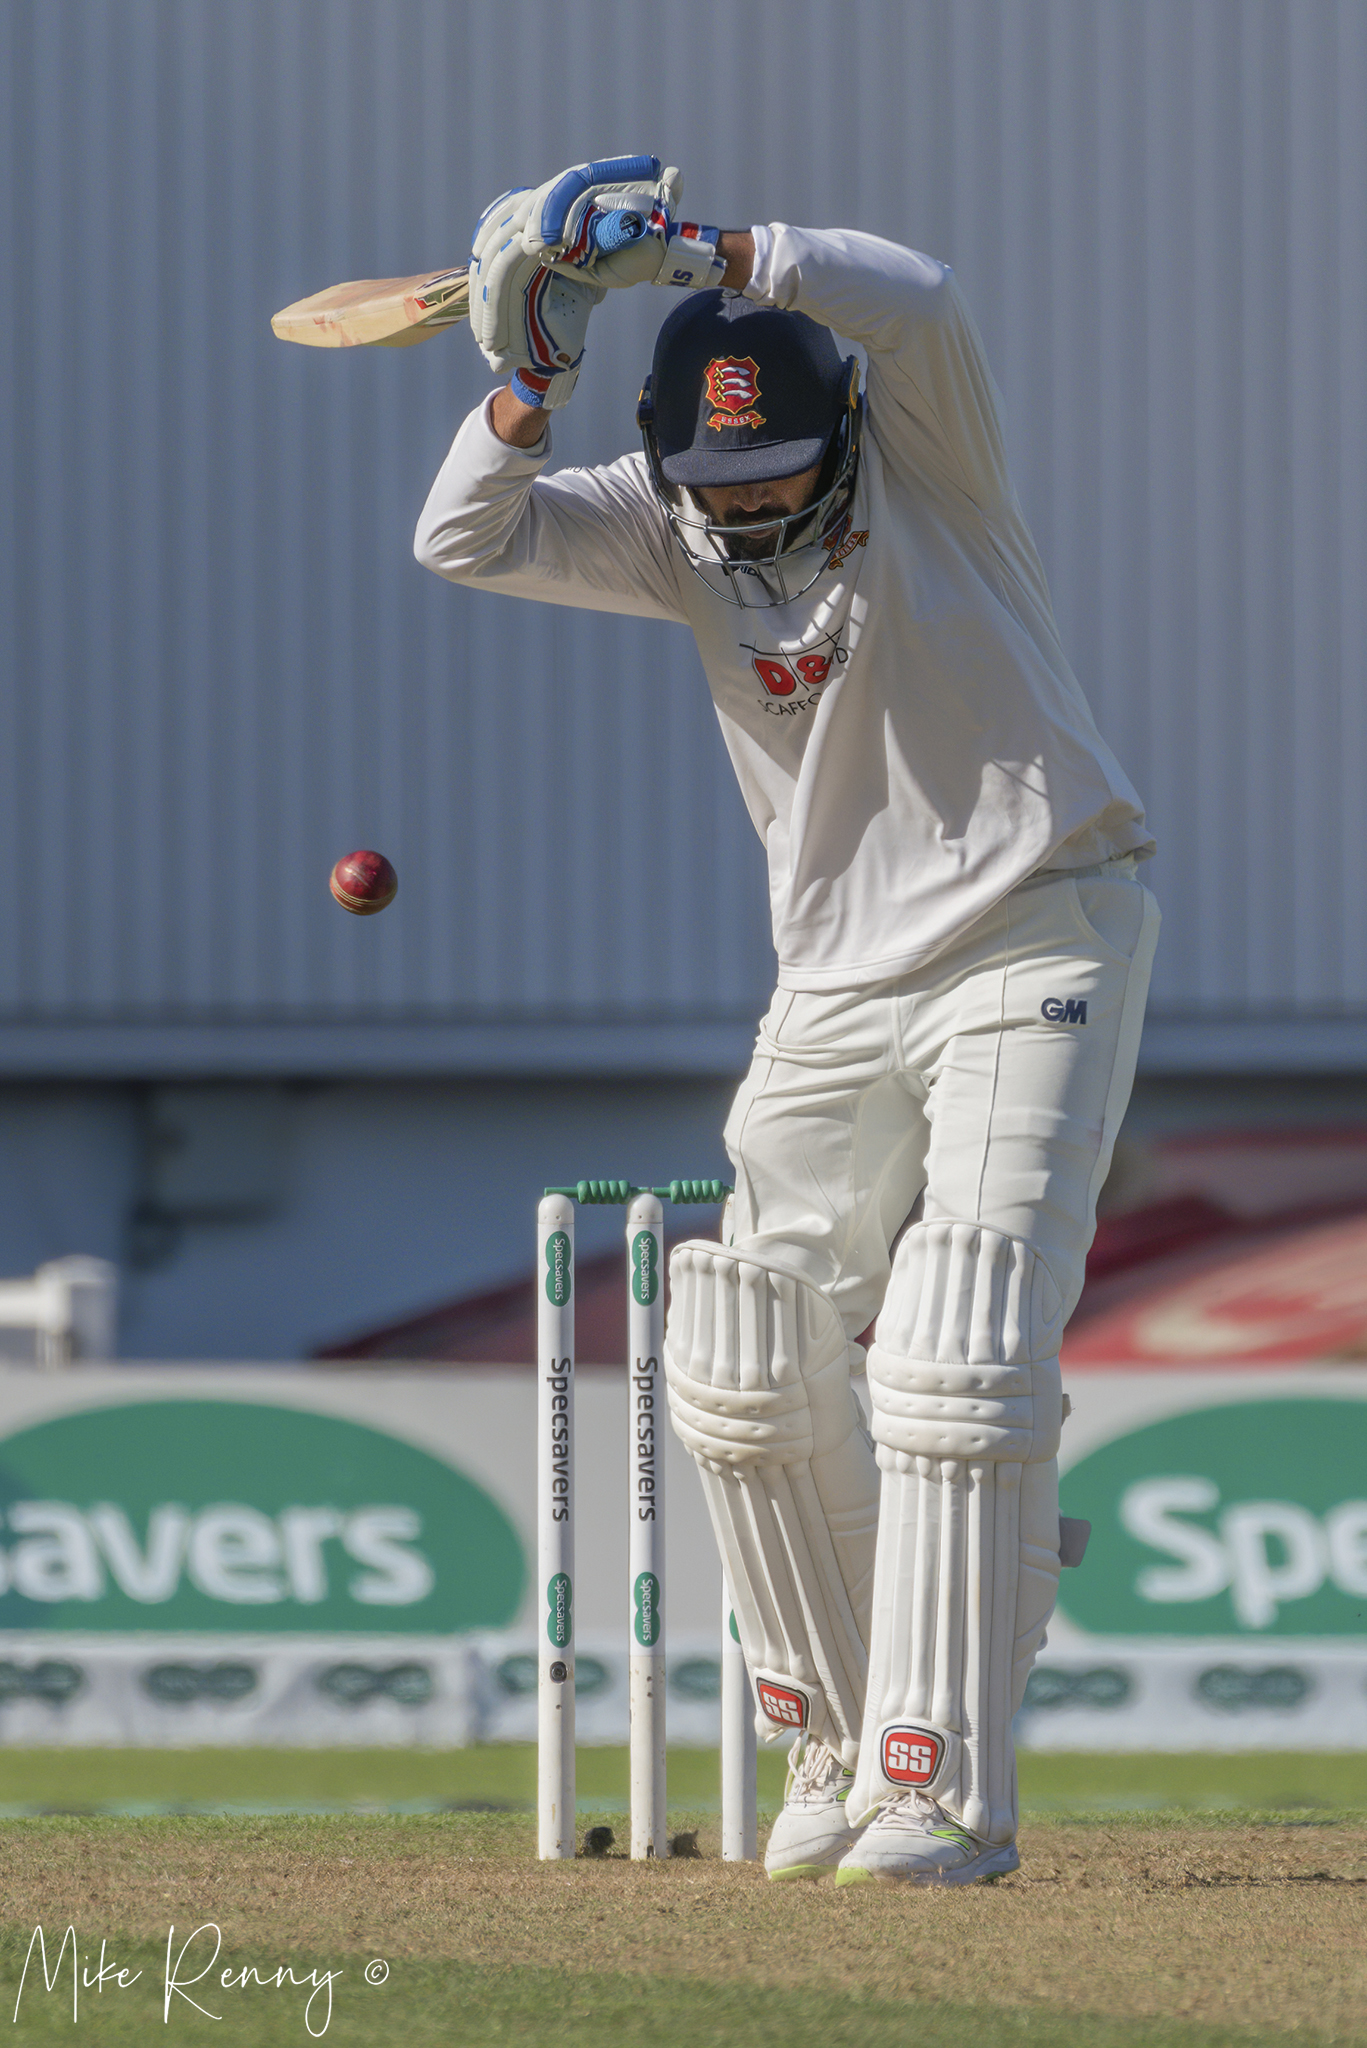 Indian Test player Murali Vijay batting for Essex